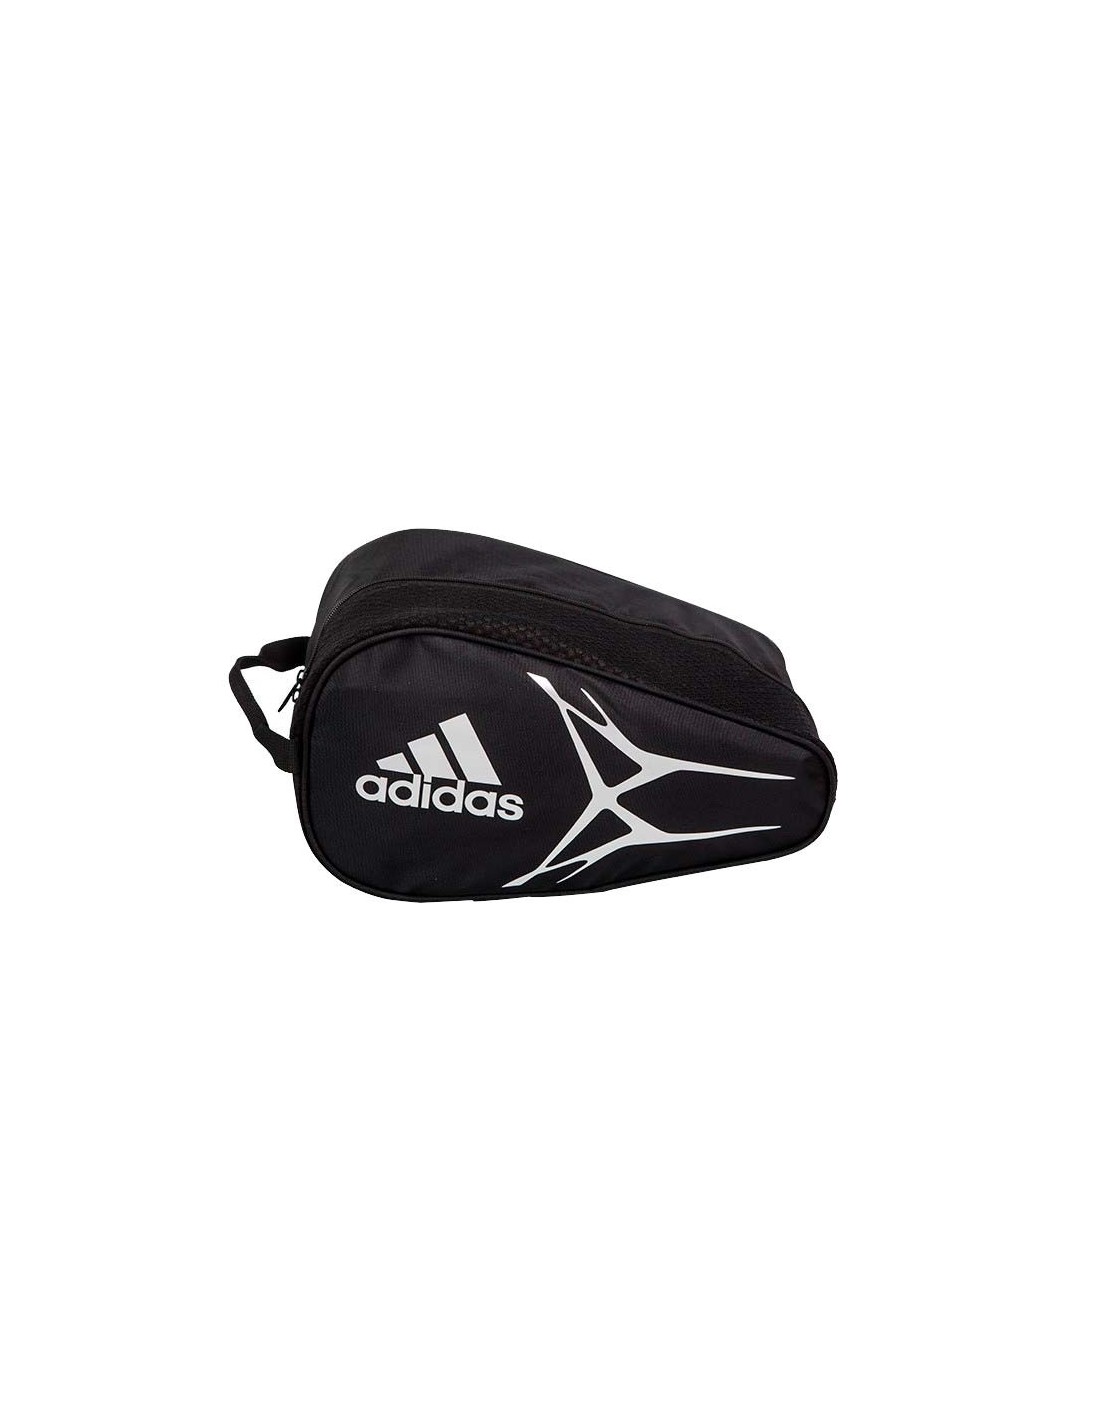 Adidas 2.0 Silver Shoe Bag | ADIDAS racket bags | Time2Padel